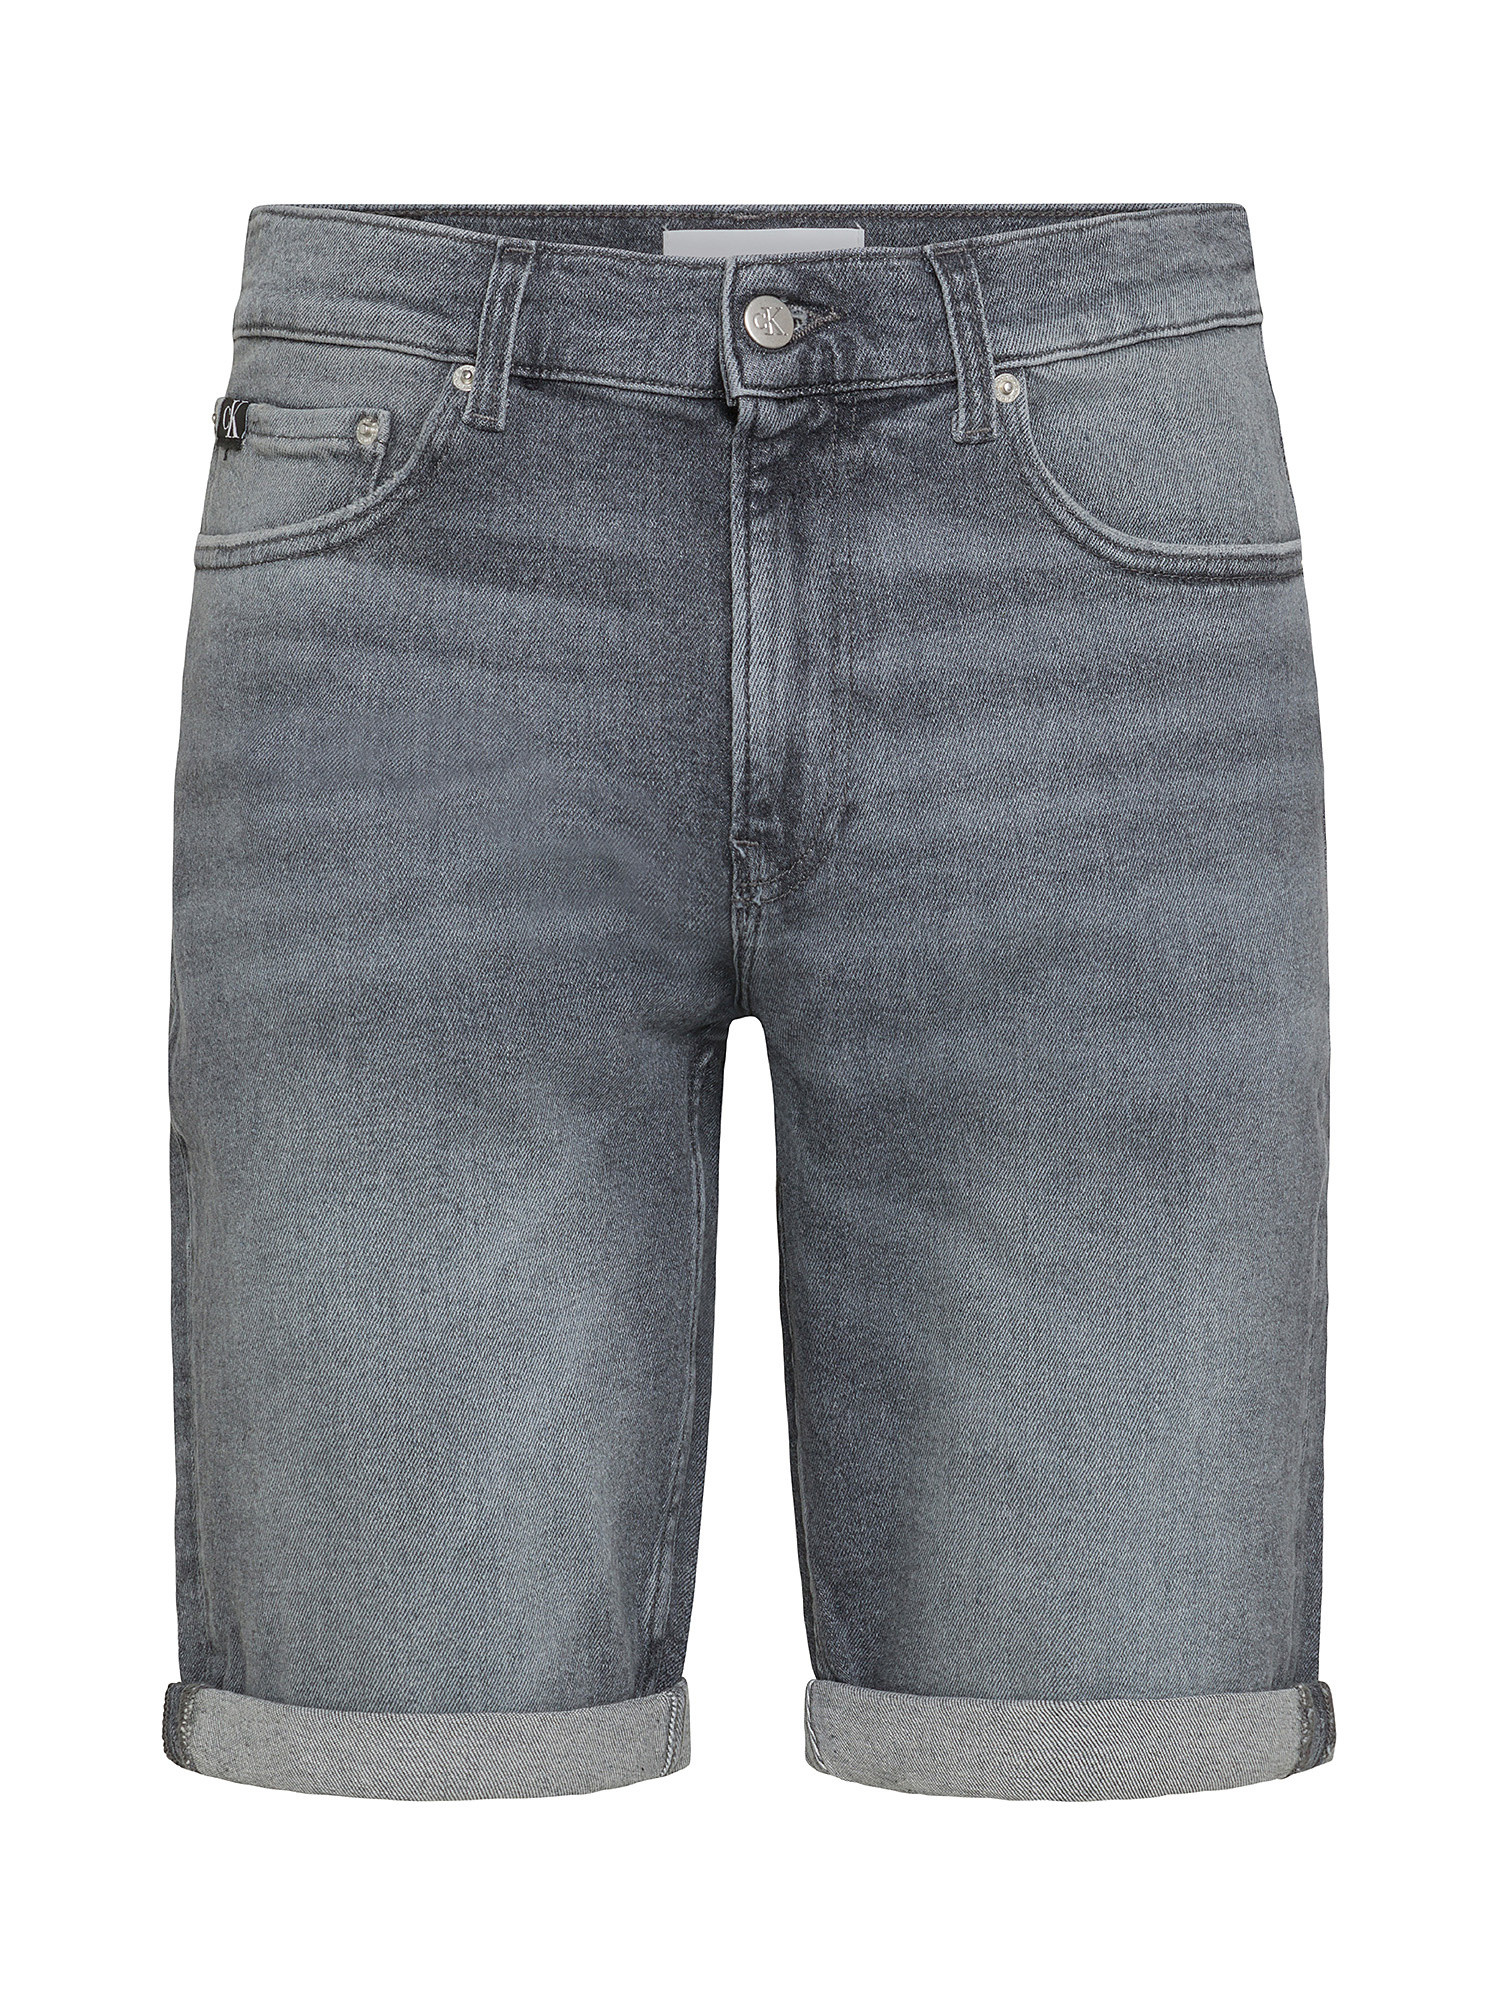 Calvin Klein Jeans -  Pantaloncini in jeans slim fit, Grigio, large image number 0